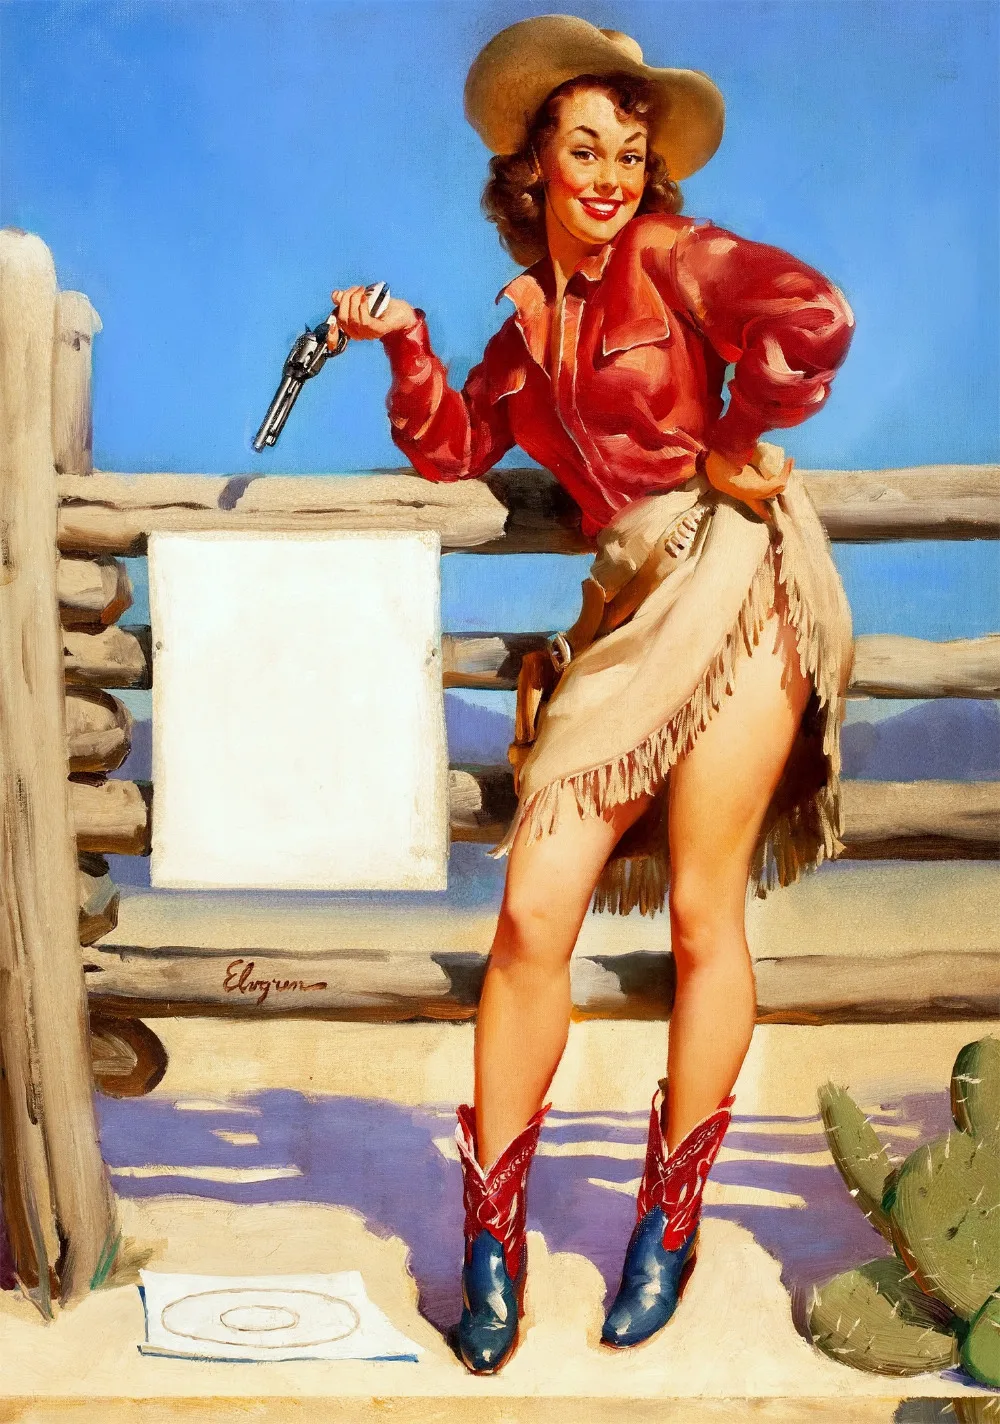 Farm Cowgirl Gun Pop Art Pin Up Vintage Poster Classic